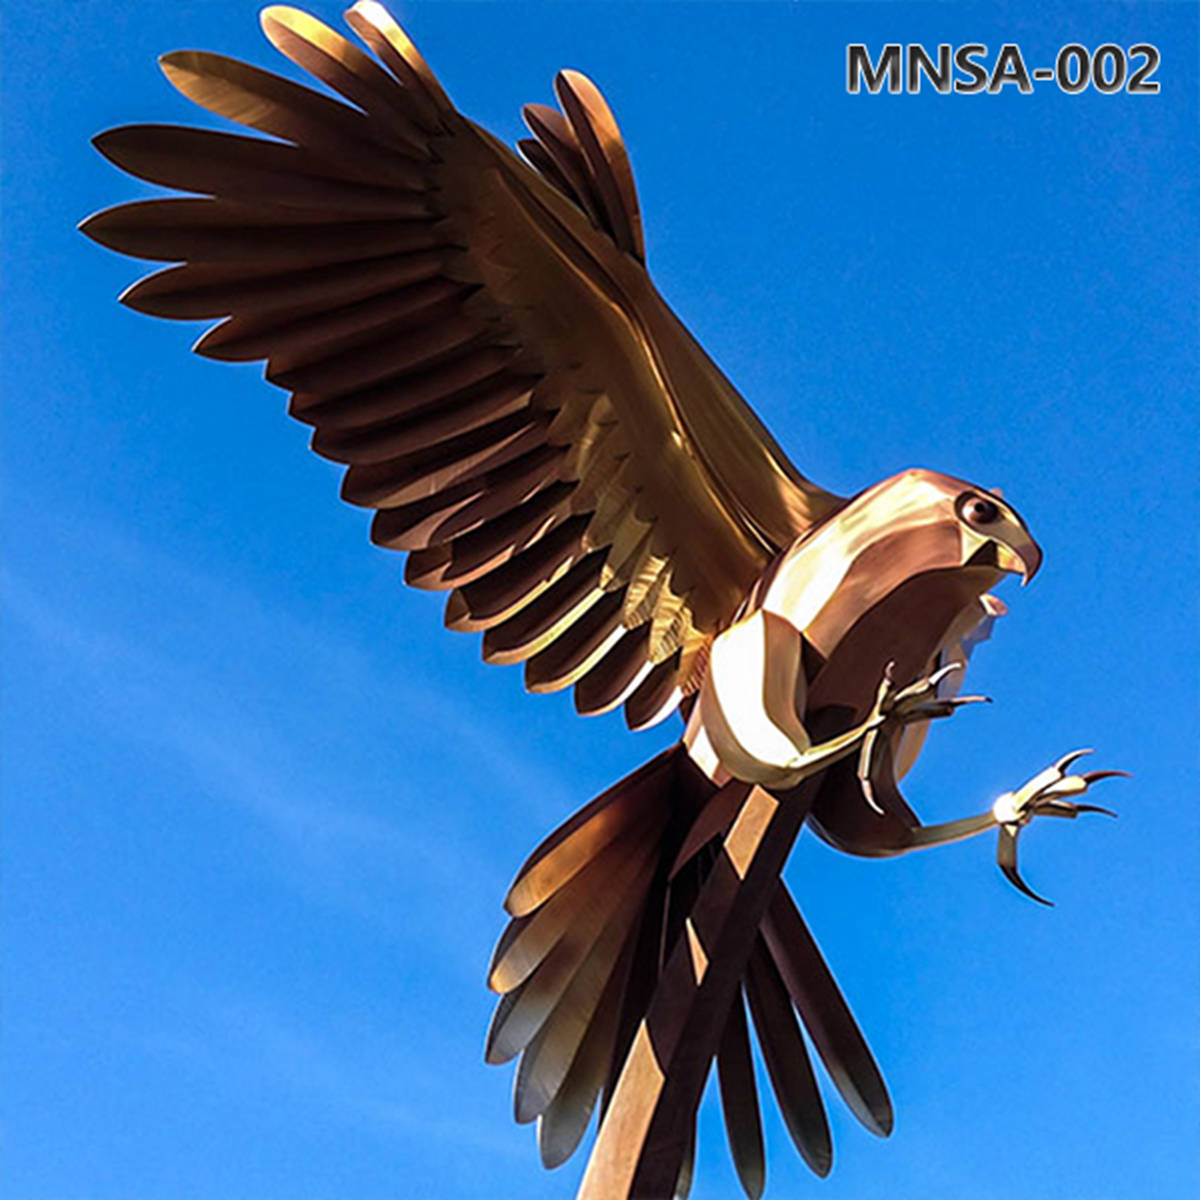 Lifelike Gold Stainless Steel Eagle Sculpture Outdoor MNSA-002